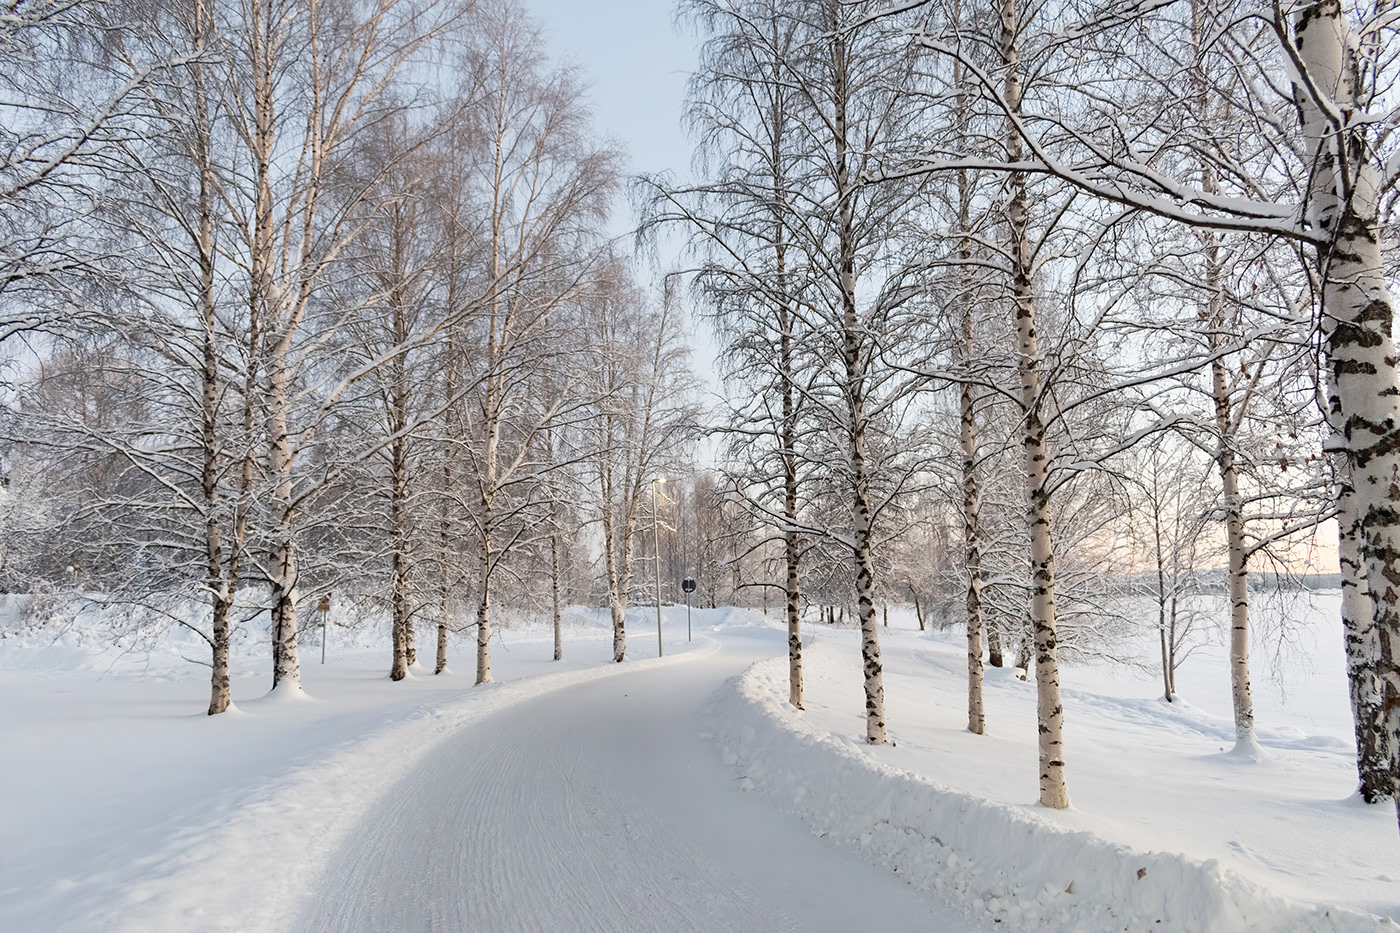 Atardecer finland Finlandia invierno nieve Photography  rovaniemi snow sunset winter